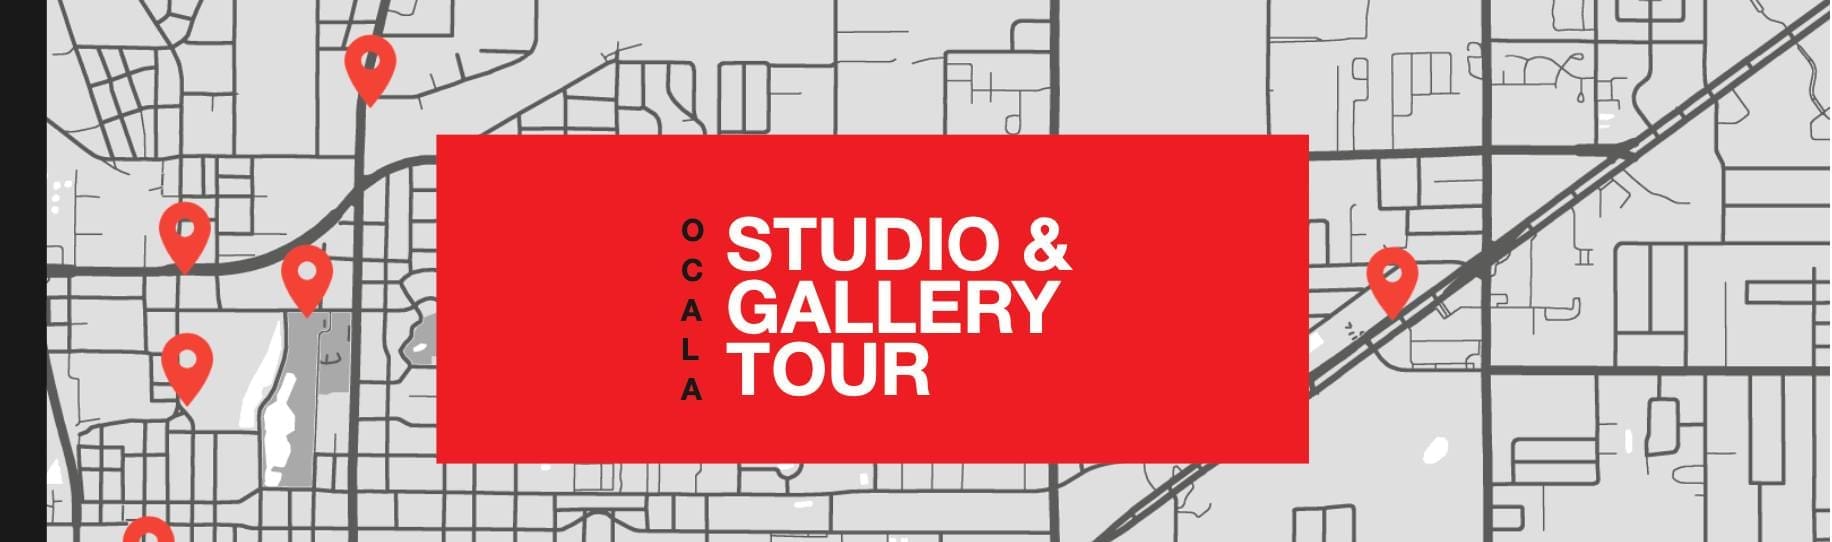 Ocala Studio & Gallery Tour